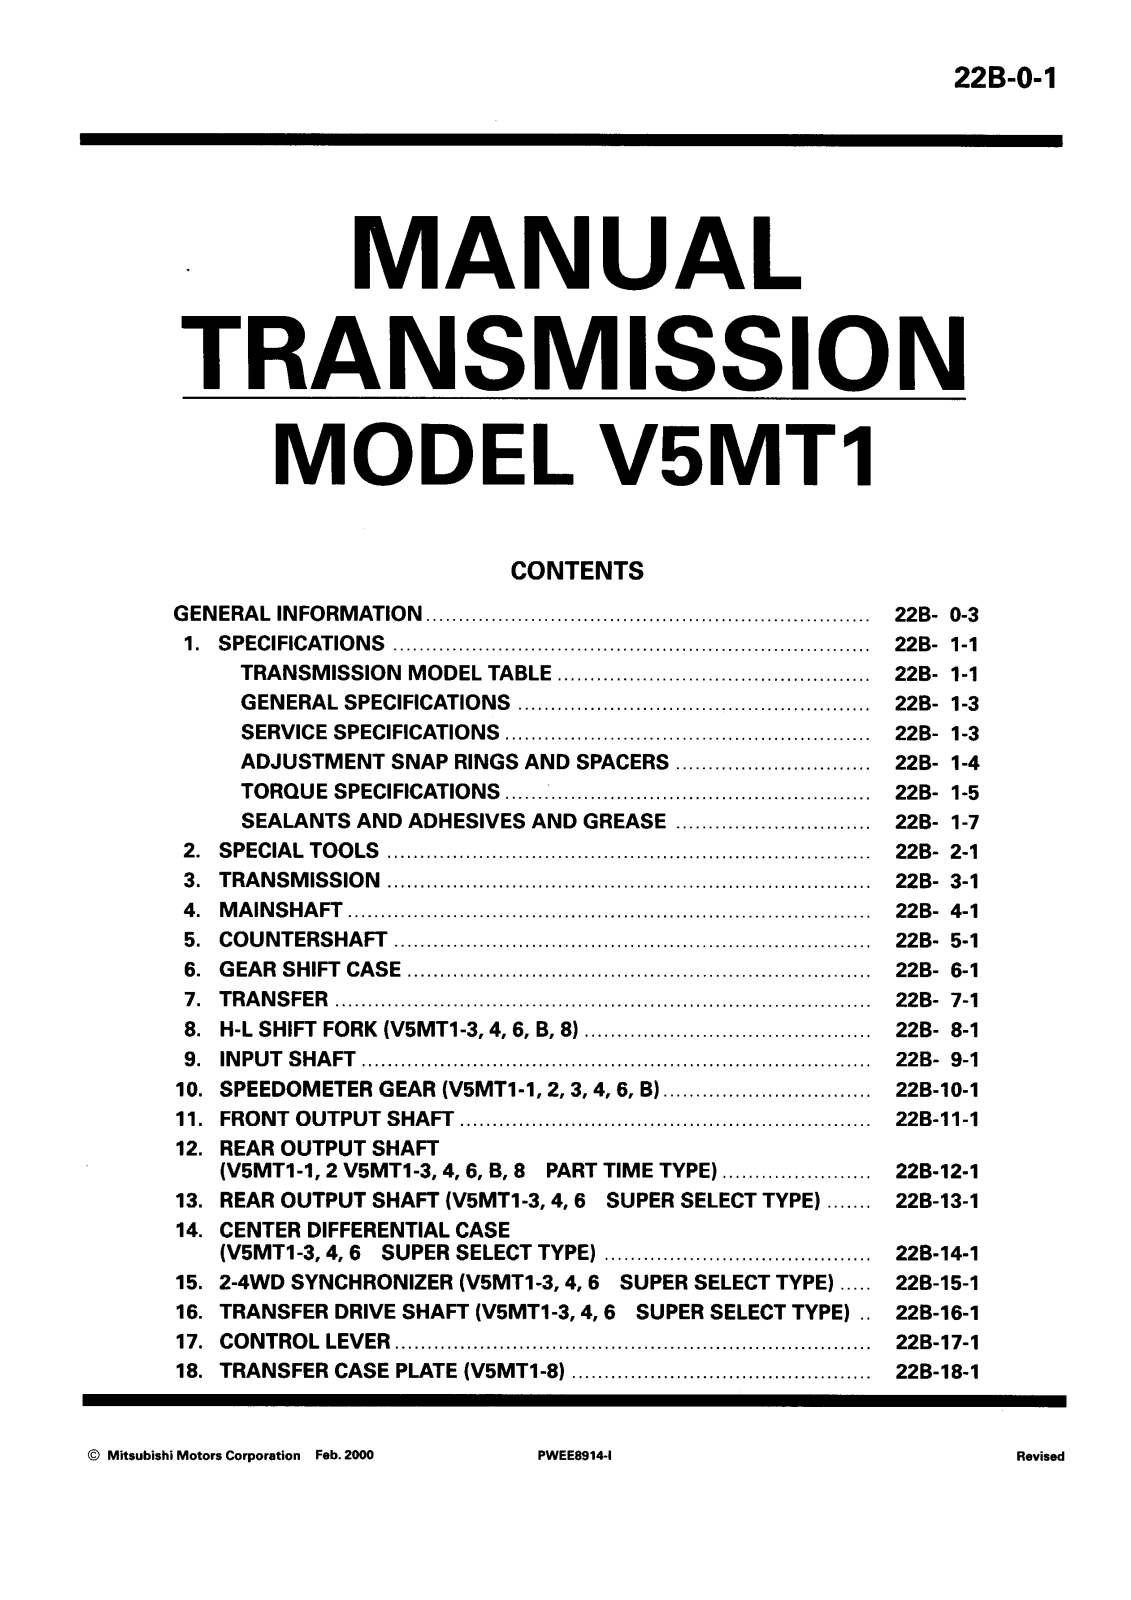 Mitsubishi V5MT1, PWEE8914-ABCDEFGHI 22B Service manual